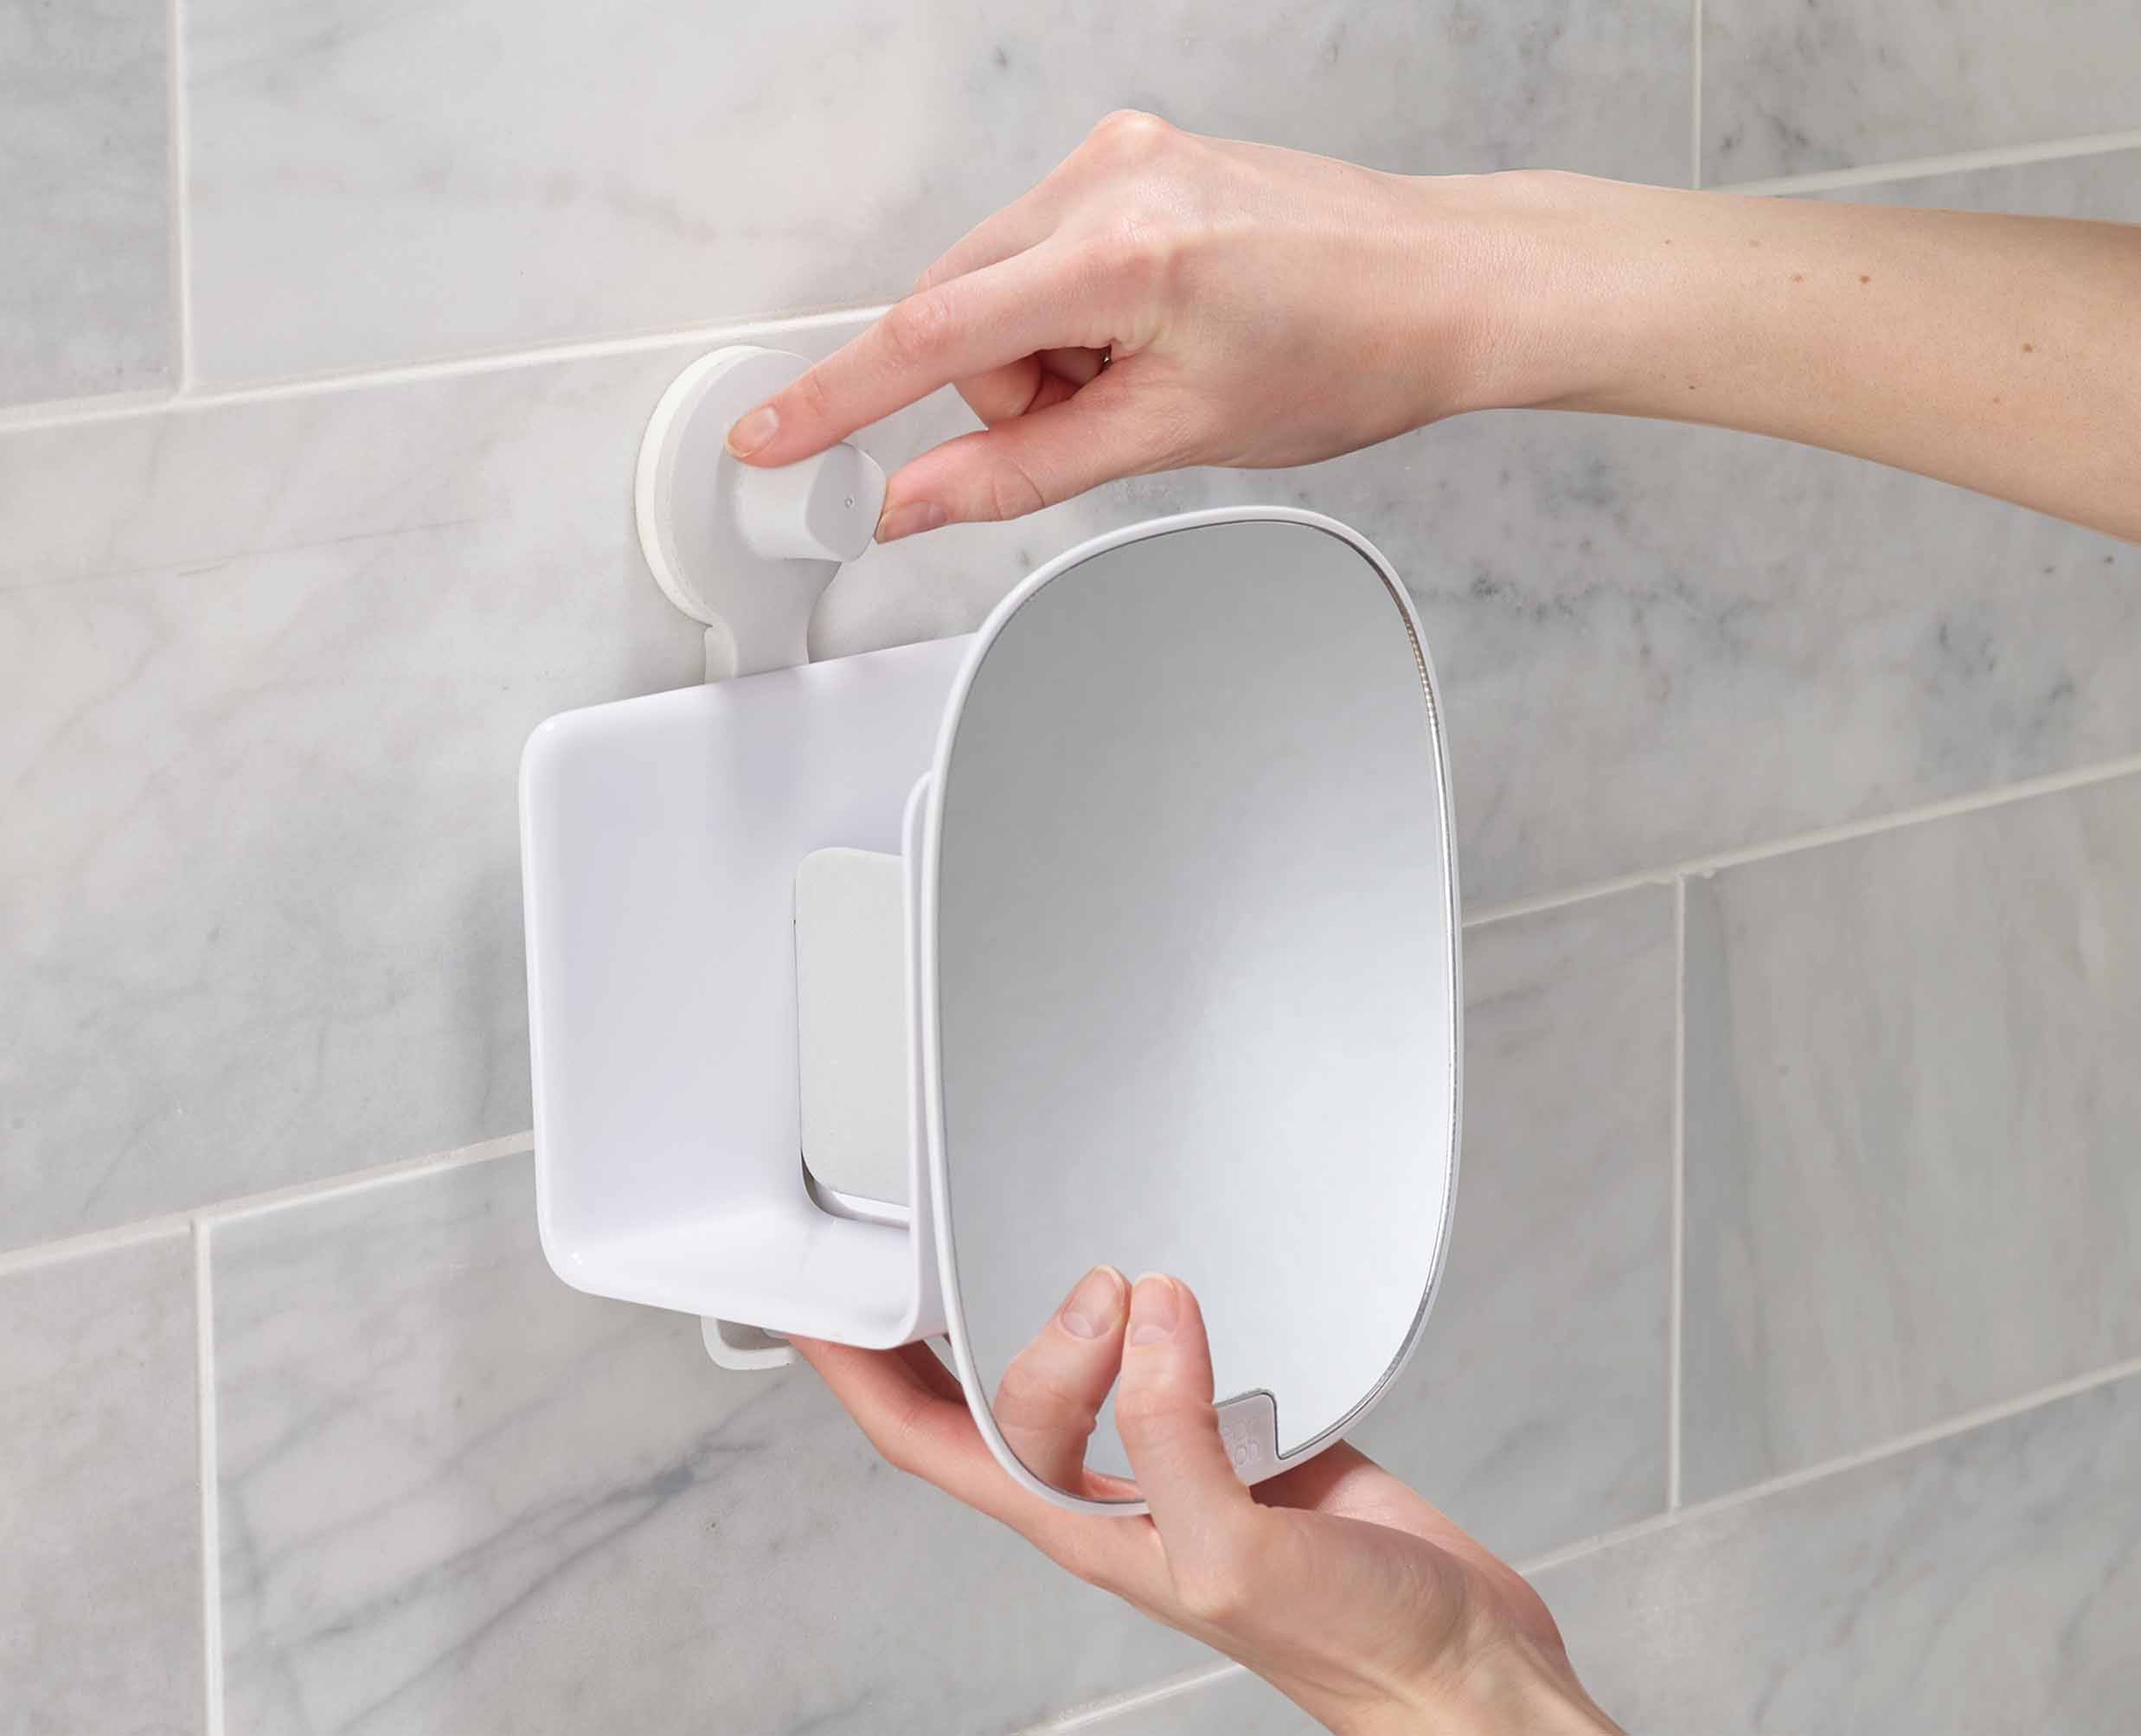 Homeify Bathroom Shower Caddy + Fogless Shower Mirror, 4 Pc Set Includes, 2  Adhesive Shower Shelves, Soap Holder & Fogless Mirror for Shower, No